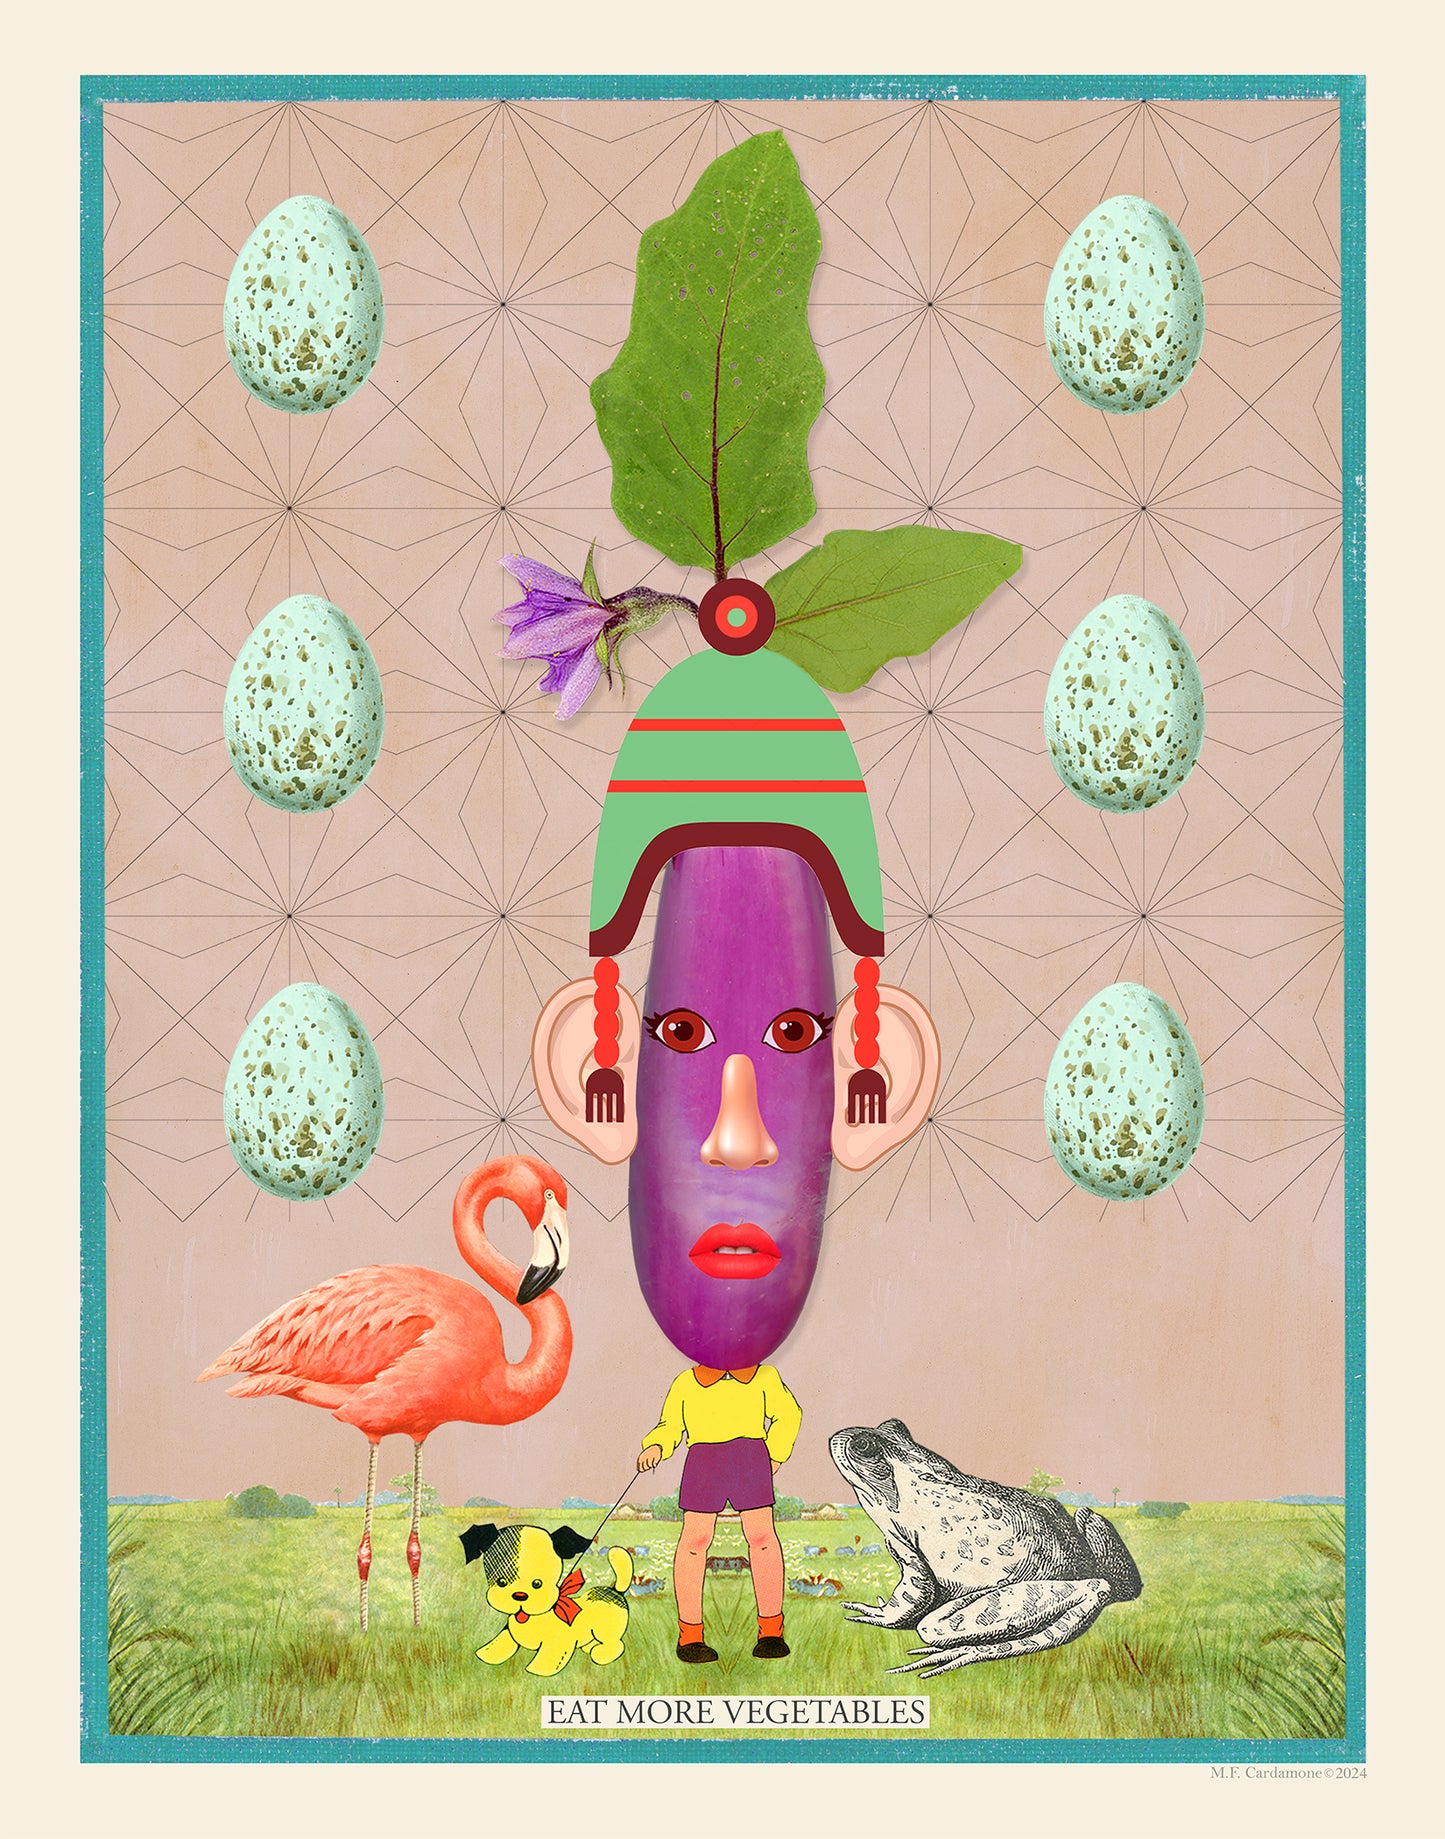 Eggplant Man, Open Edition Print by MF Cardamone